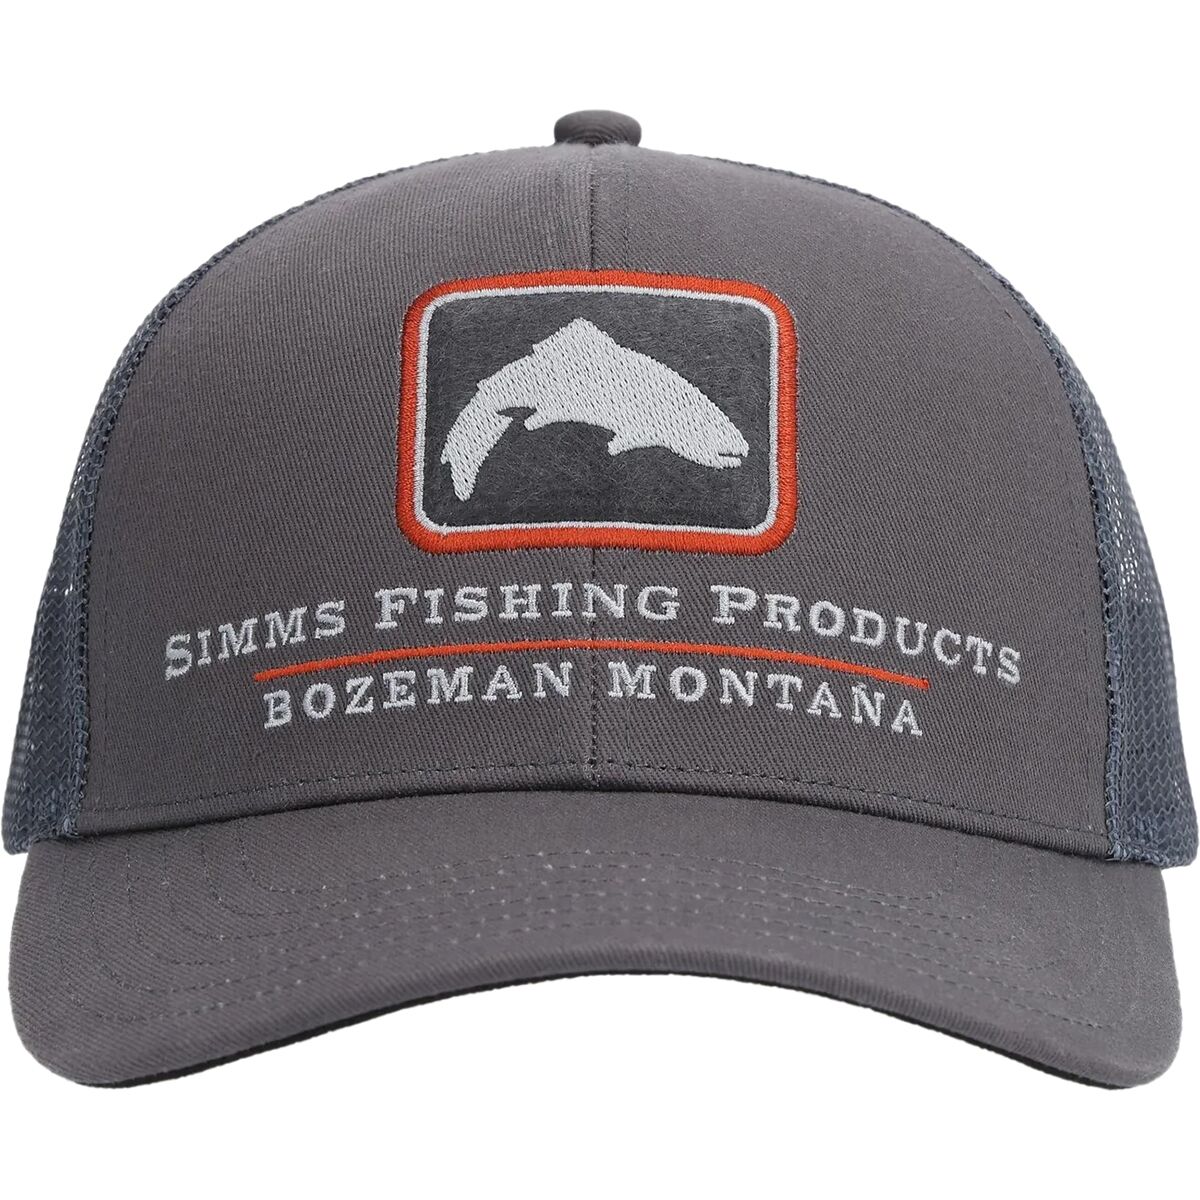 Simms Fishing Hats & Neckwear